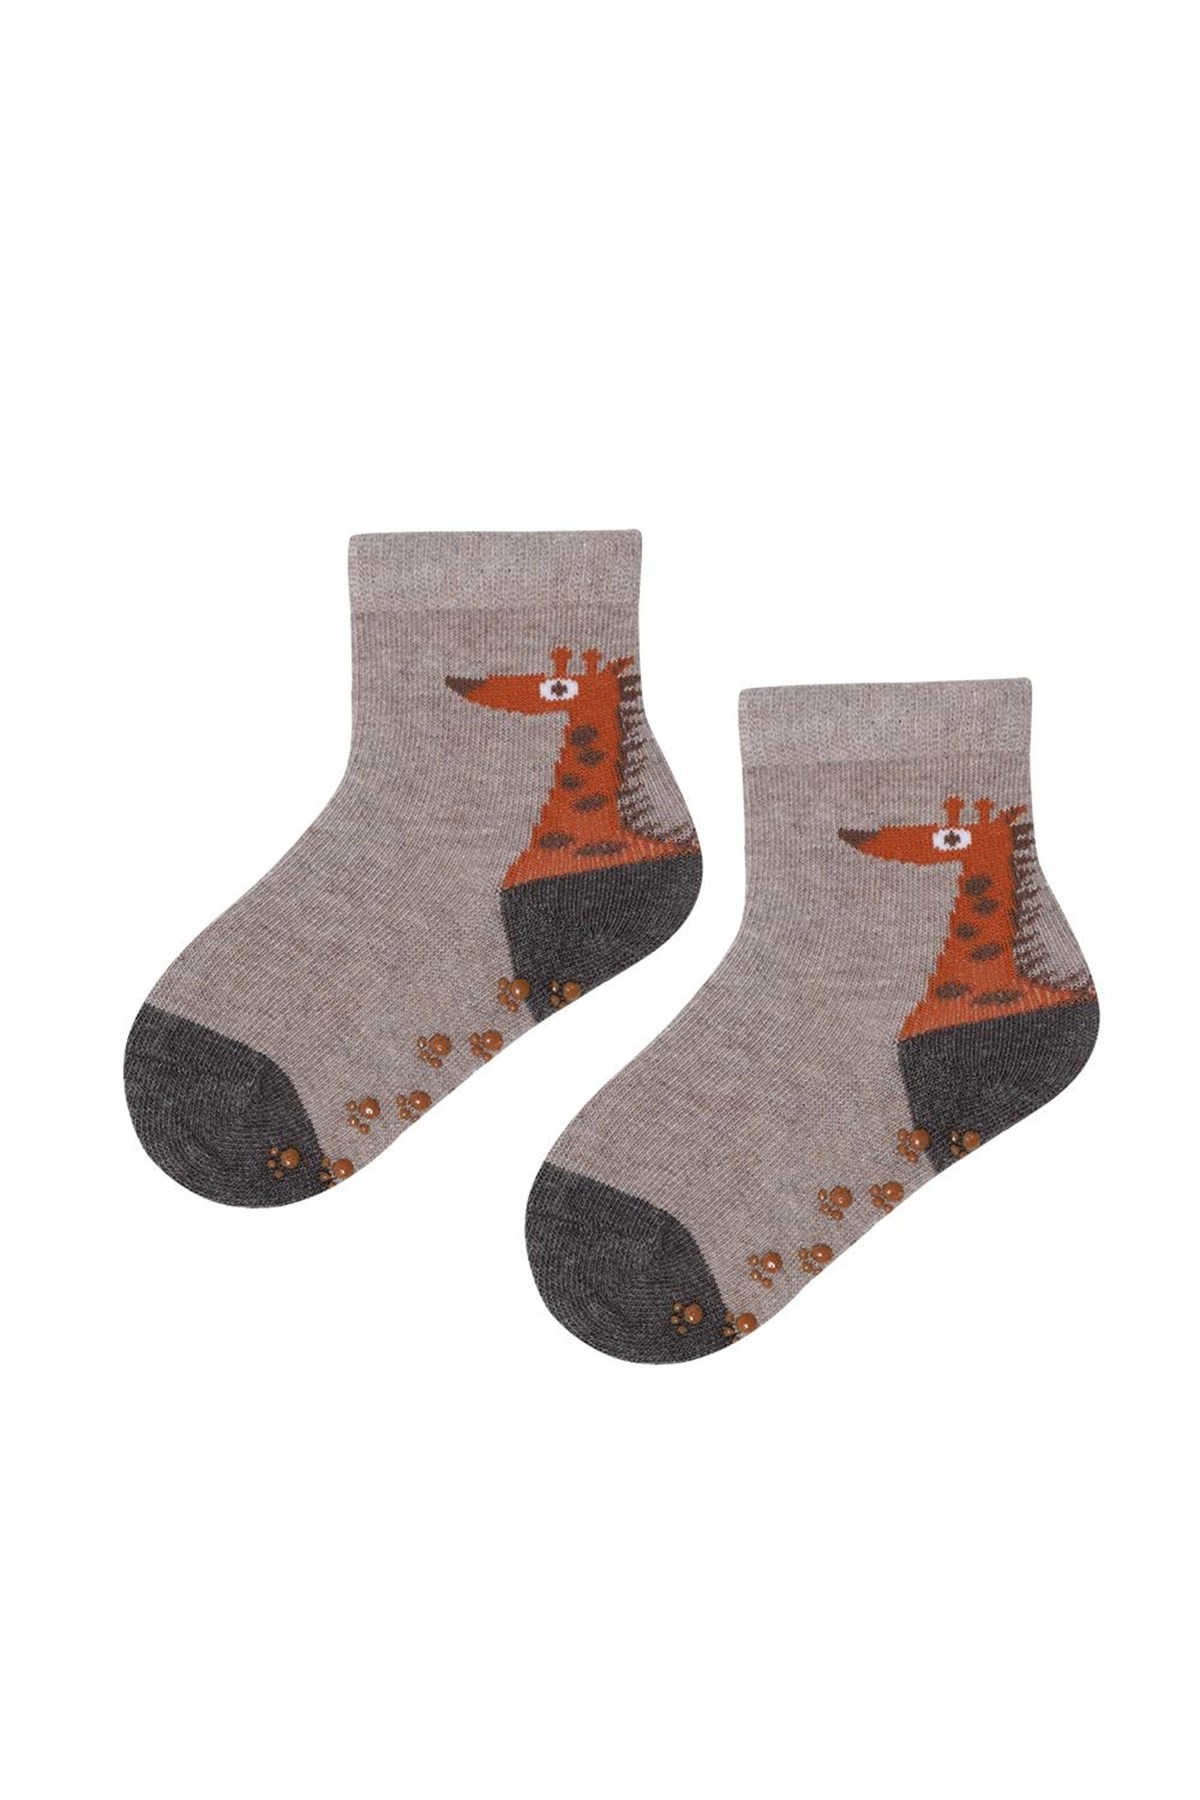 Giraffe Bebek Soket Çorap 2li MAVİ/Bej